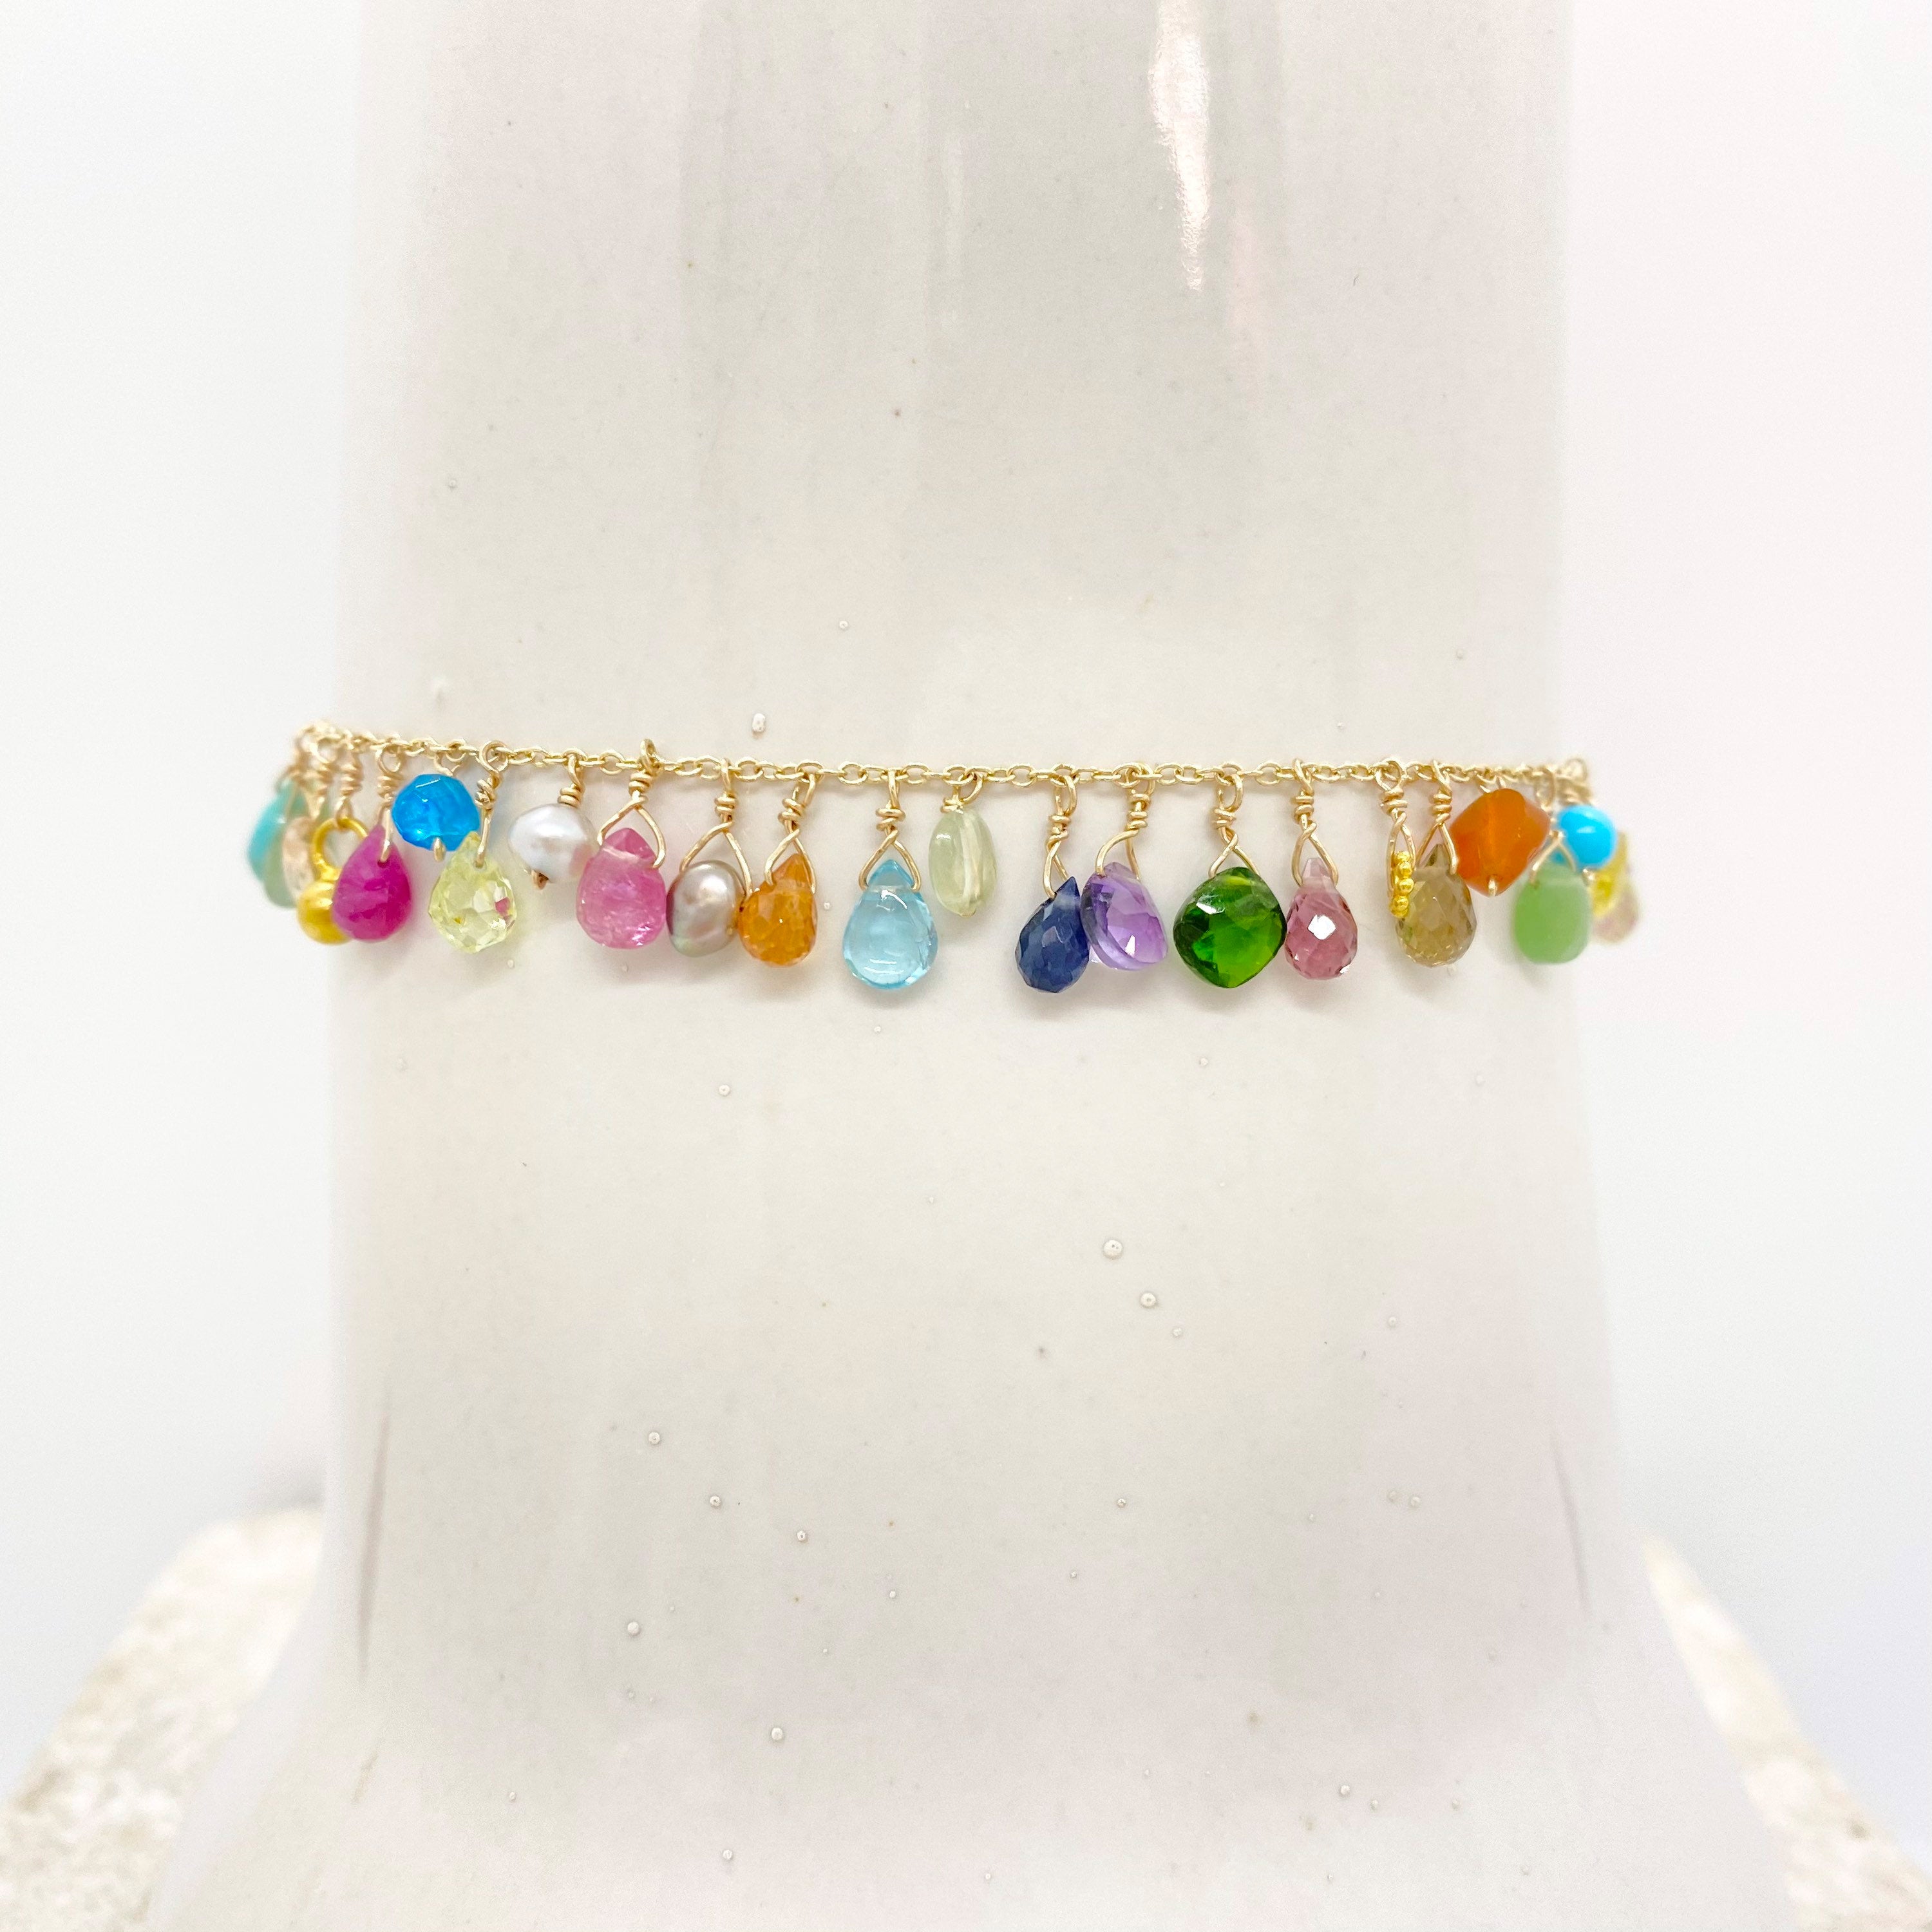 14k Gold Chain Bracelet w/ 18k Gold Pendants, Precious Stones, Semi-Precious Stones & Antique Italian Beads